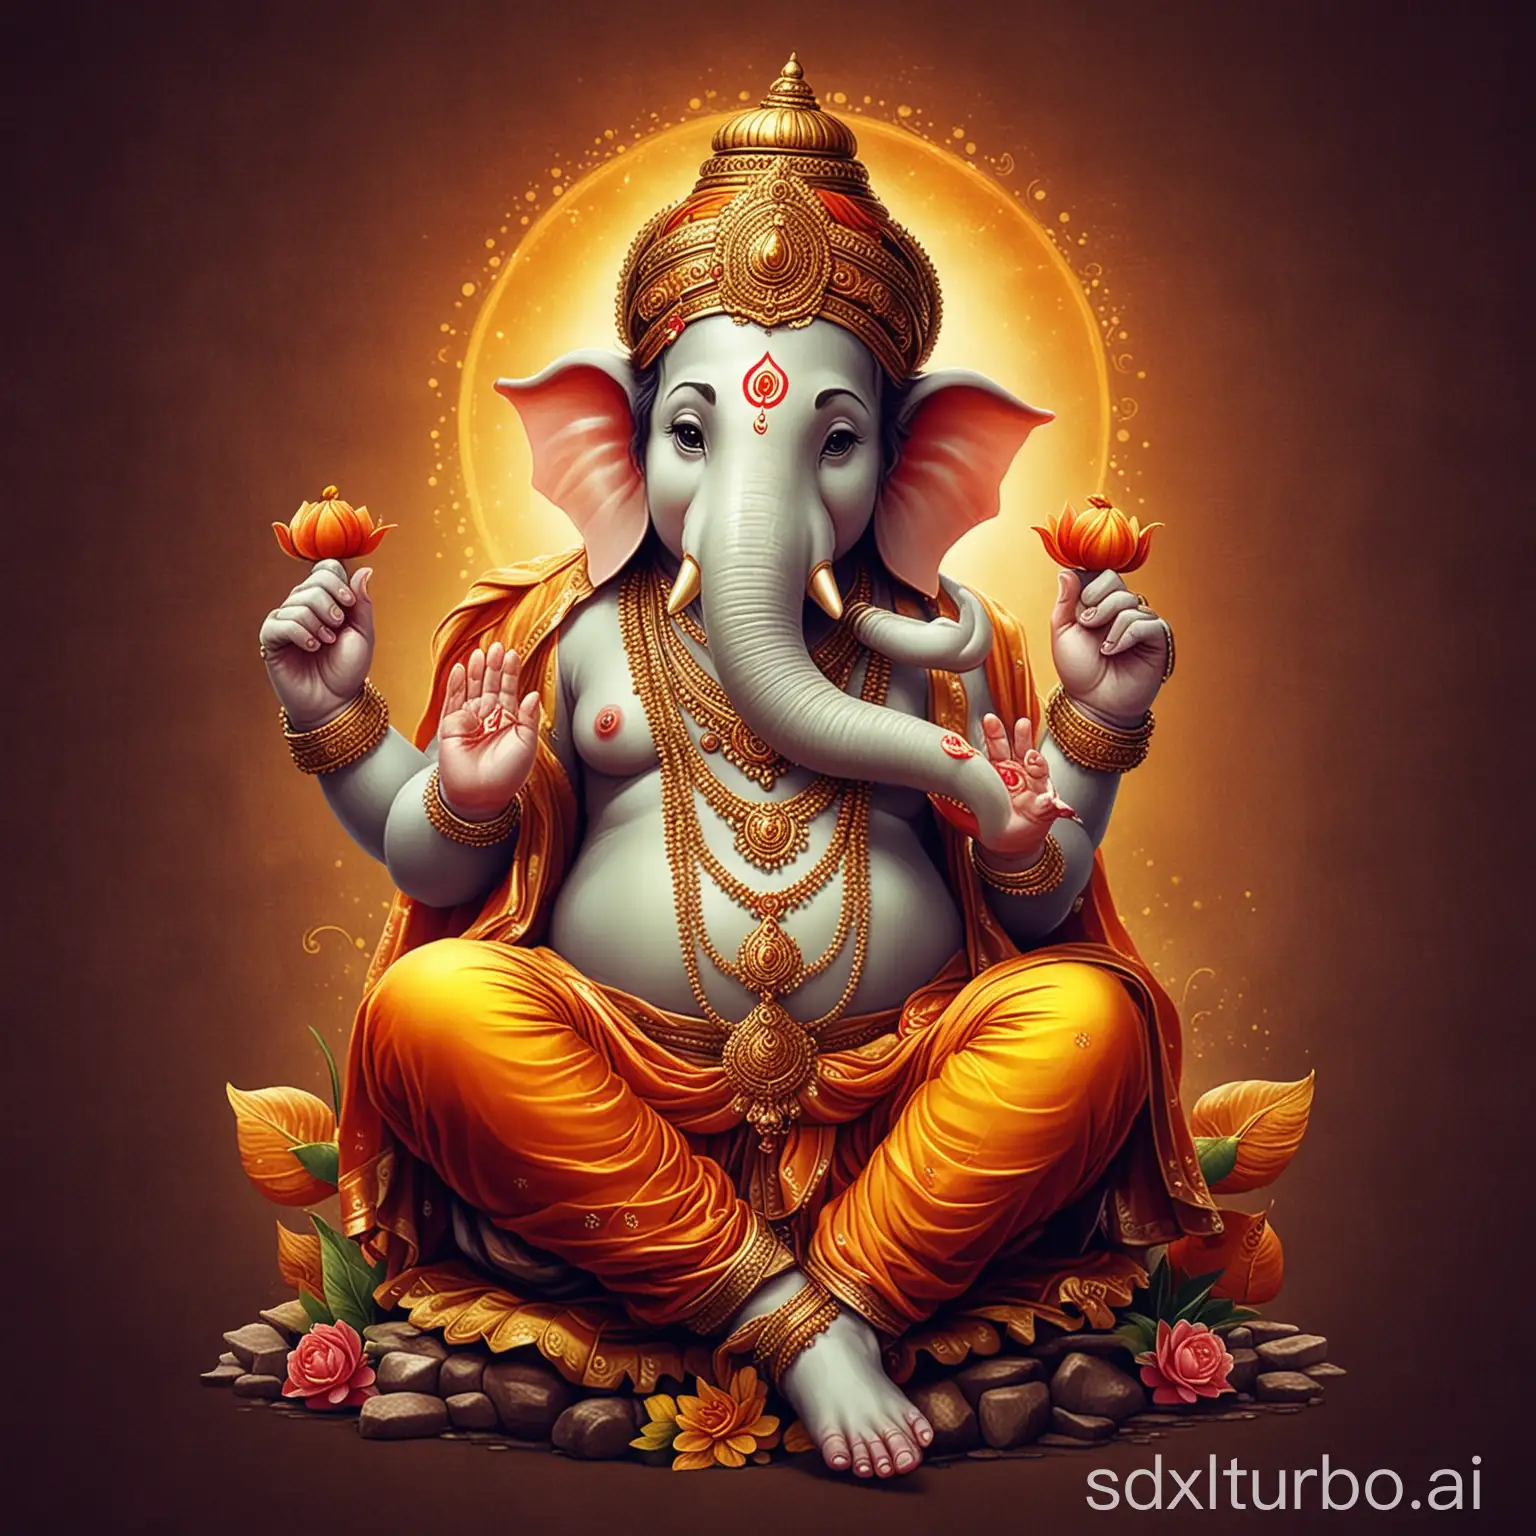 Lord Ganesh wallpaper for laptop